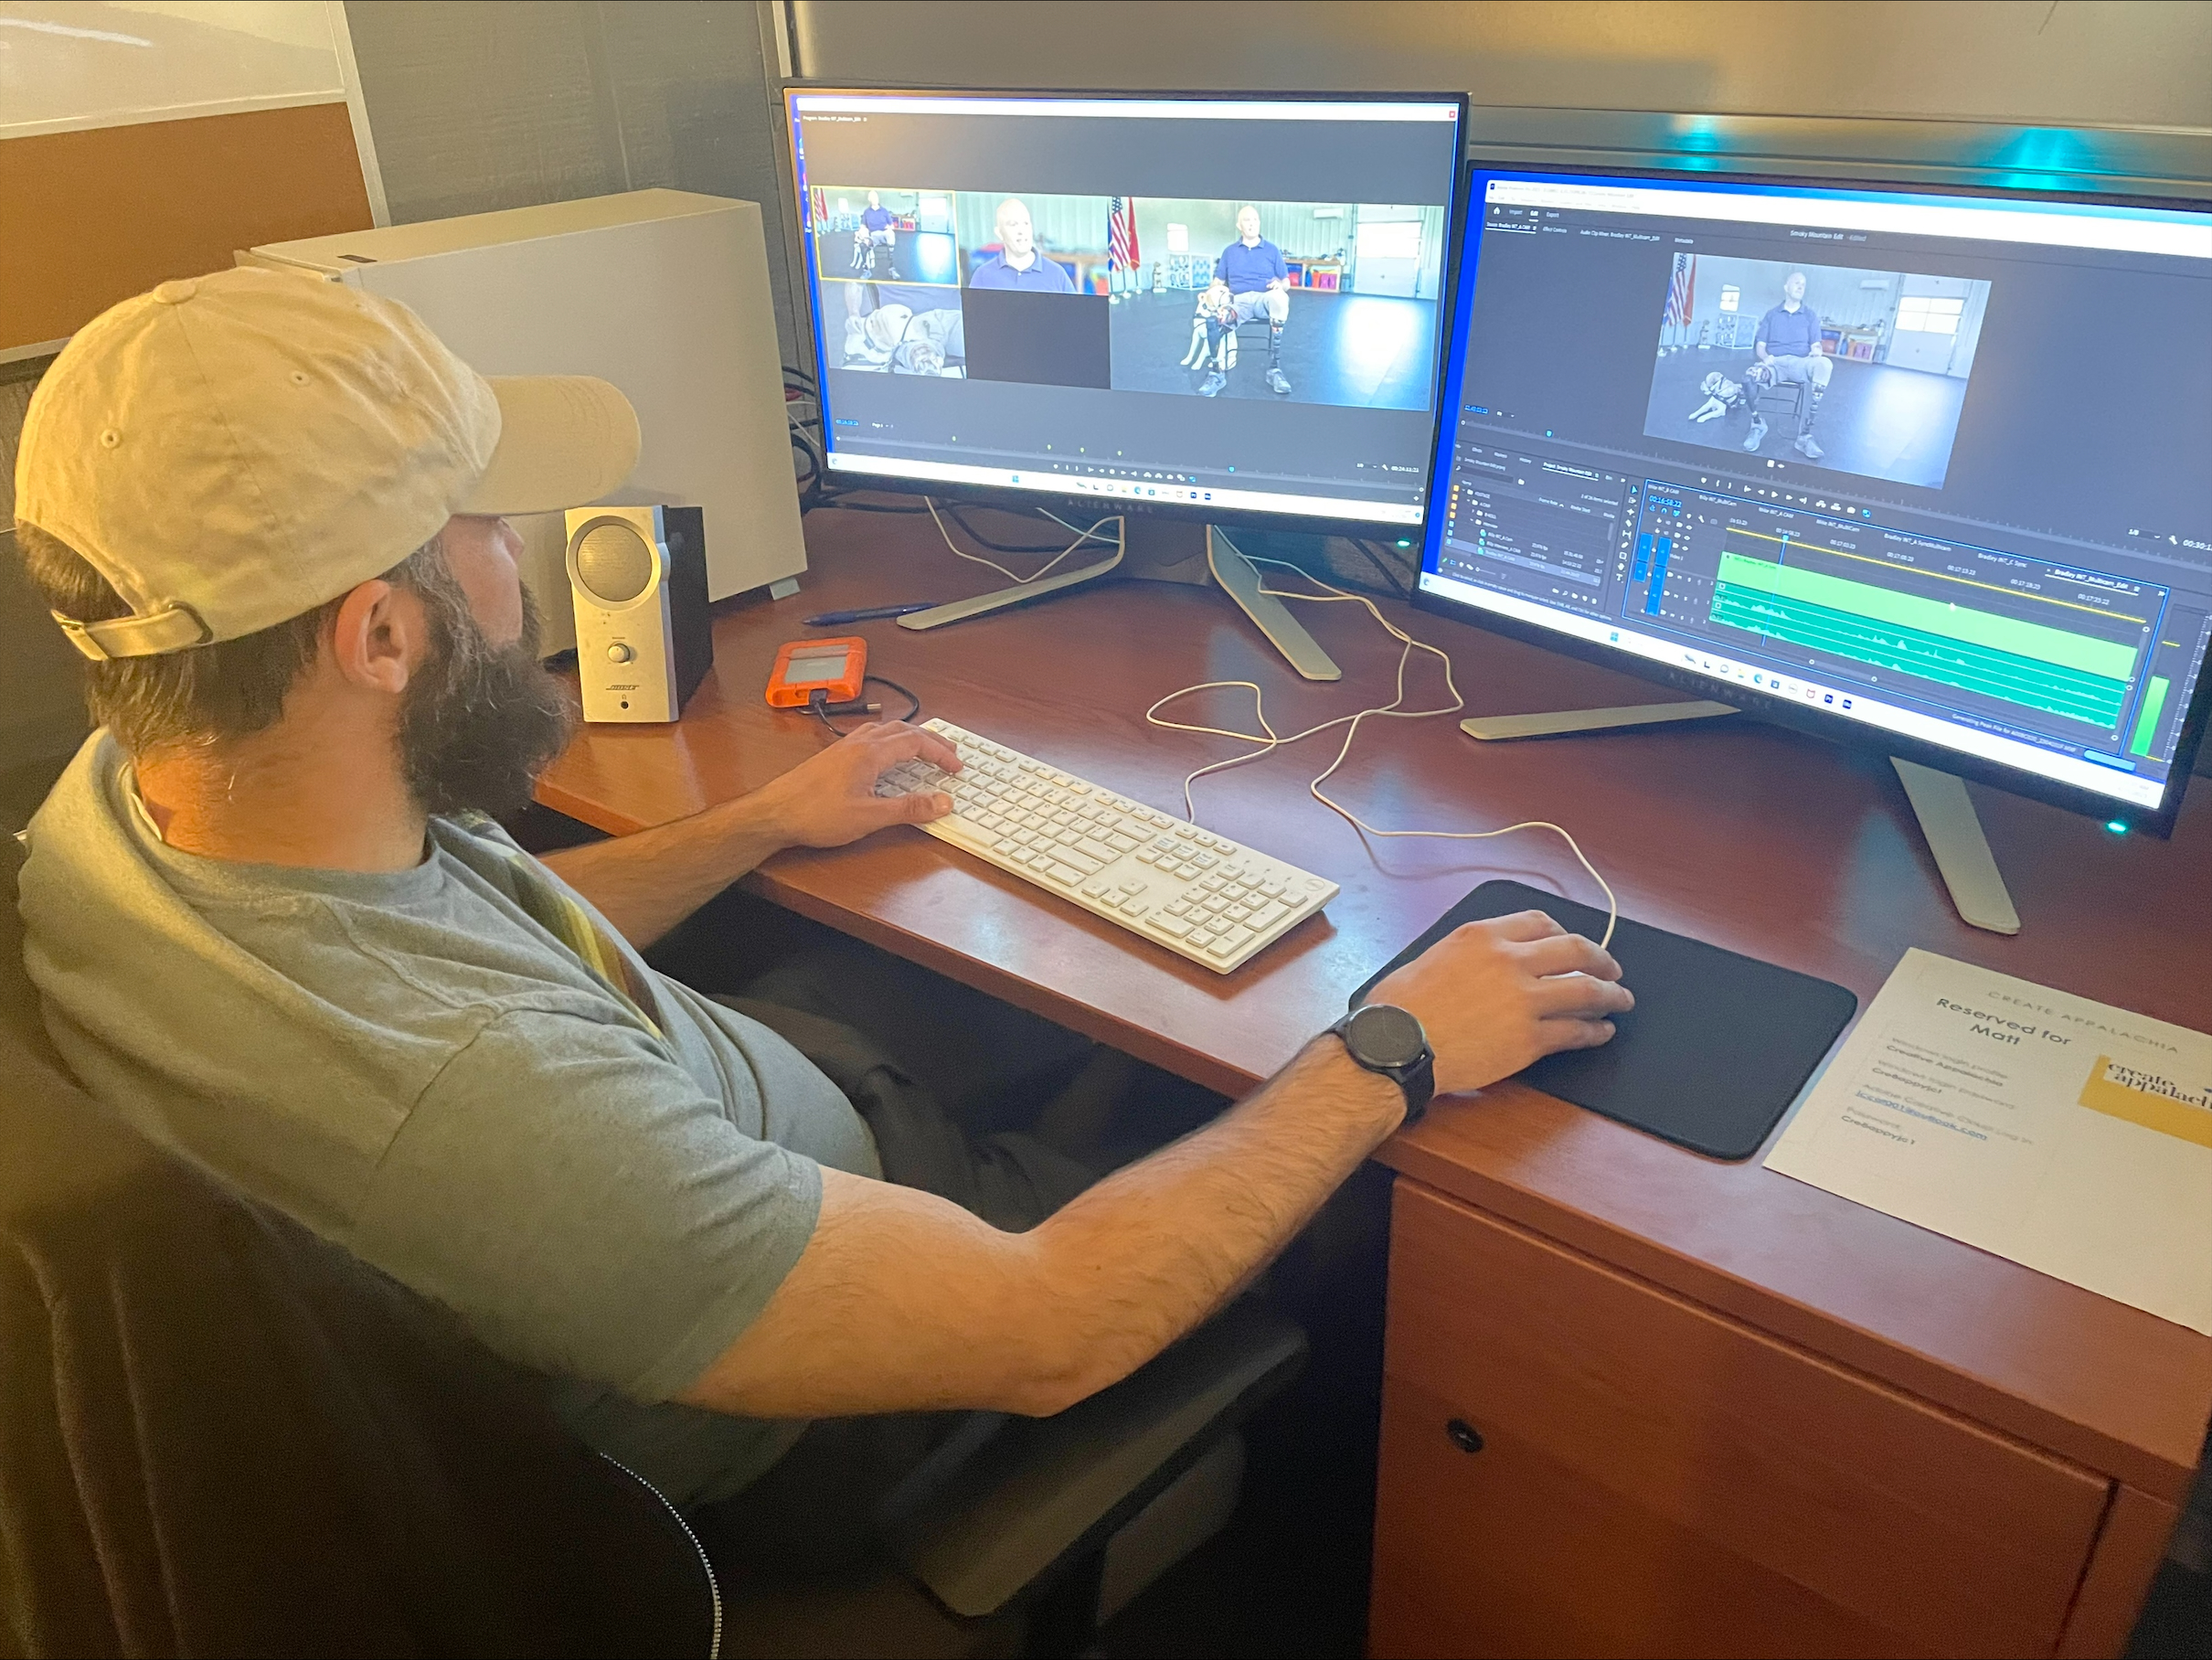 Matthew Rossetti videographer audio editing streaming lab